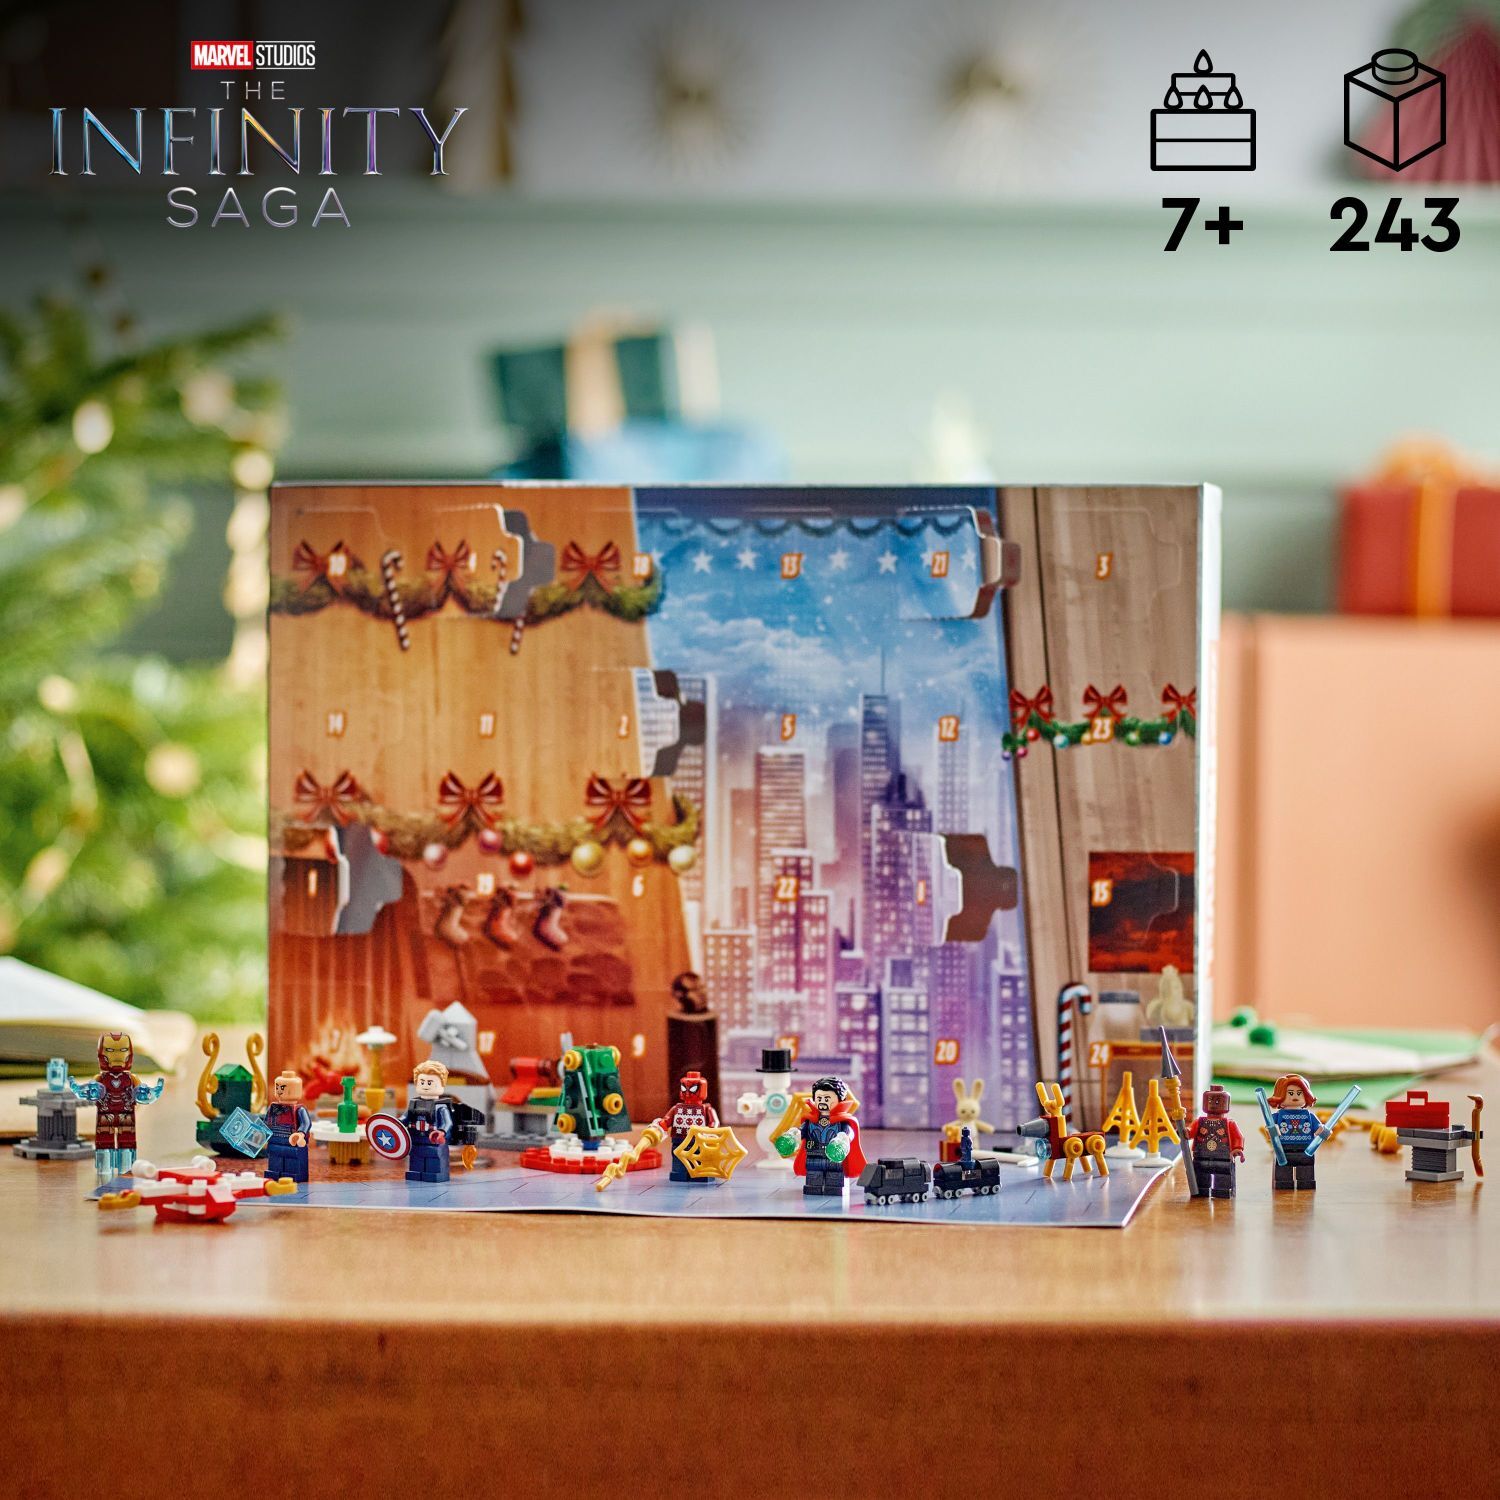 LEGO® Friends: Advent Calendar 2023 - The Toy Box Hanover